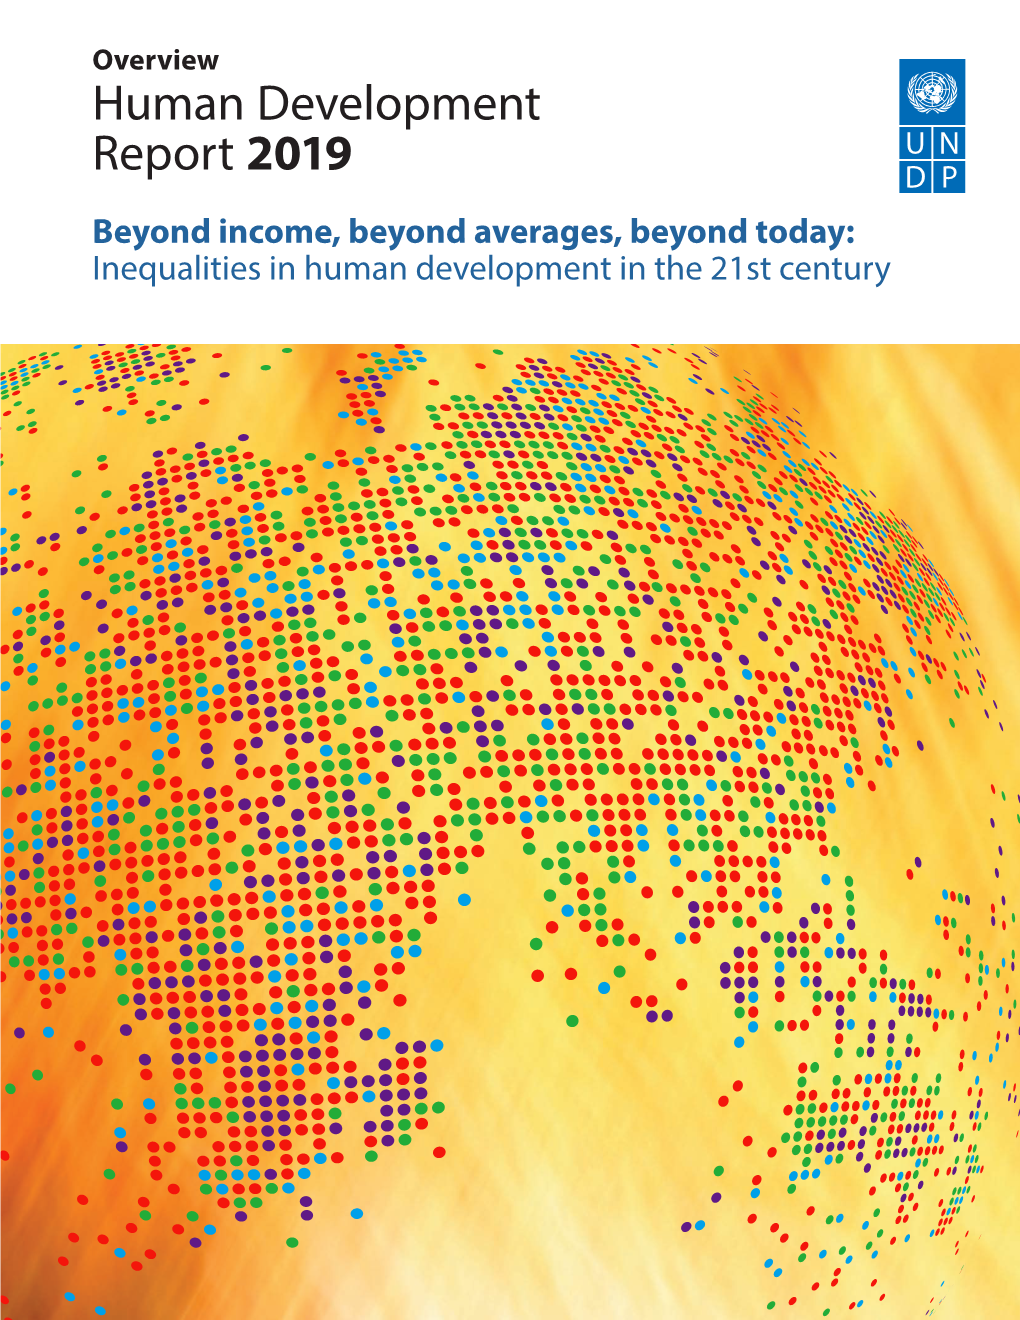 Overview Human Development Report 2019